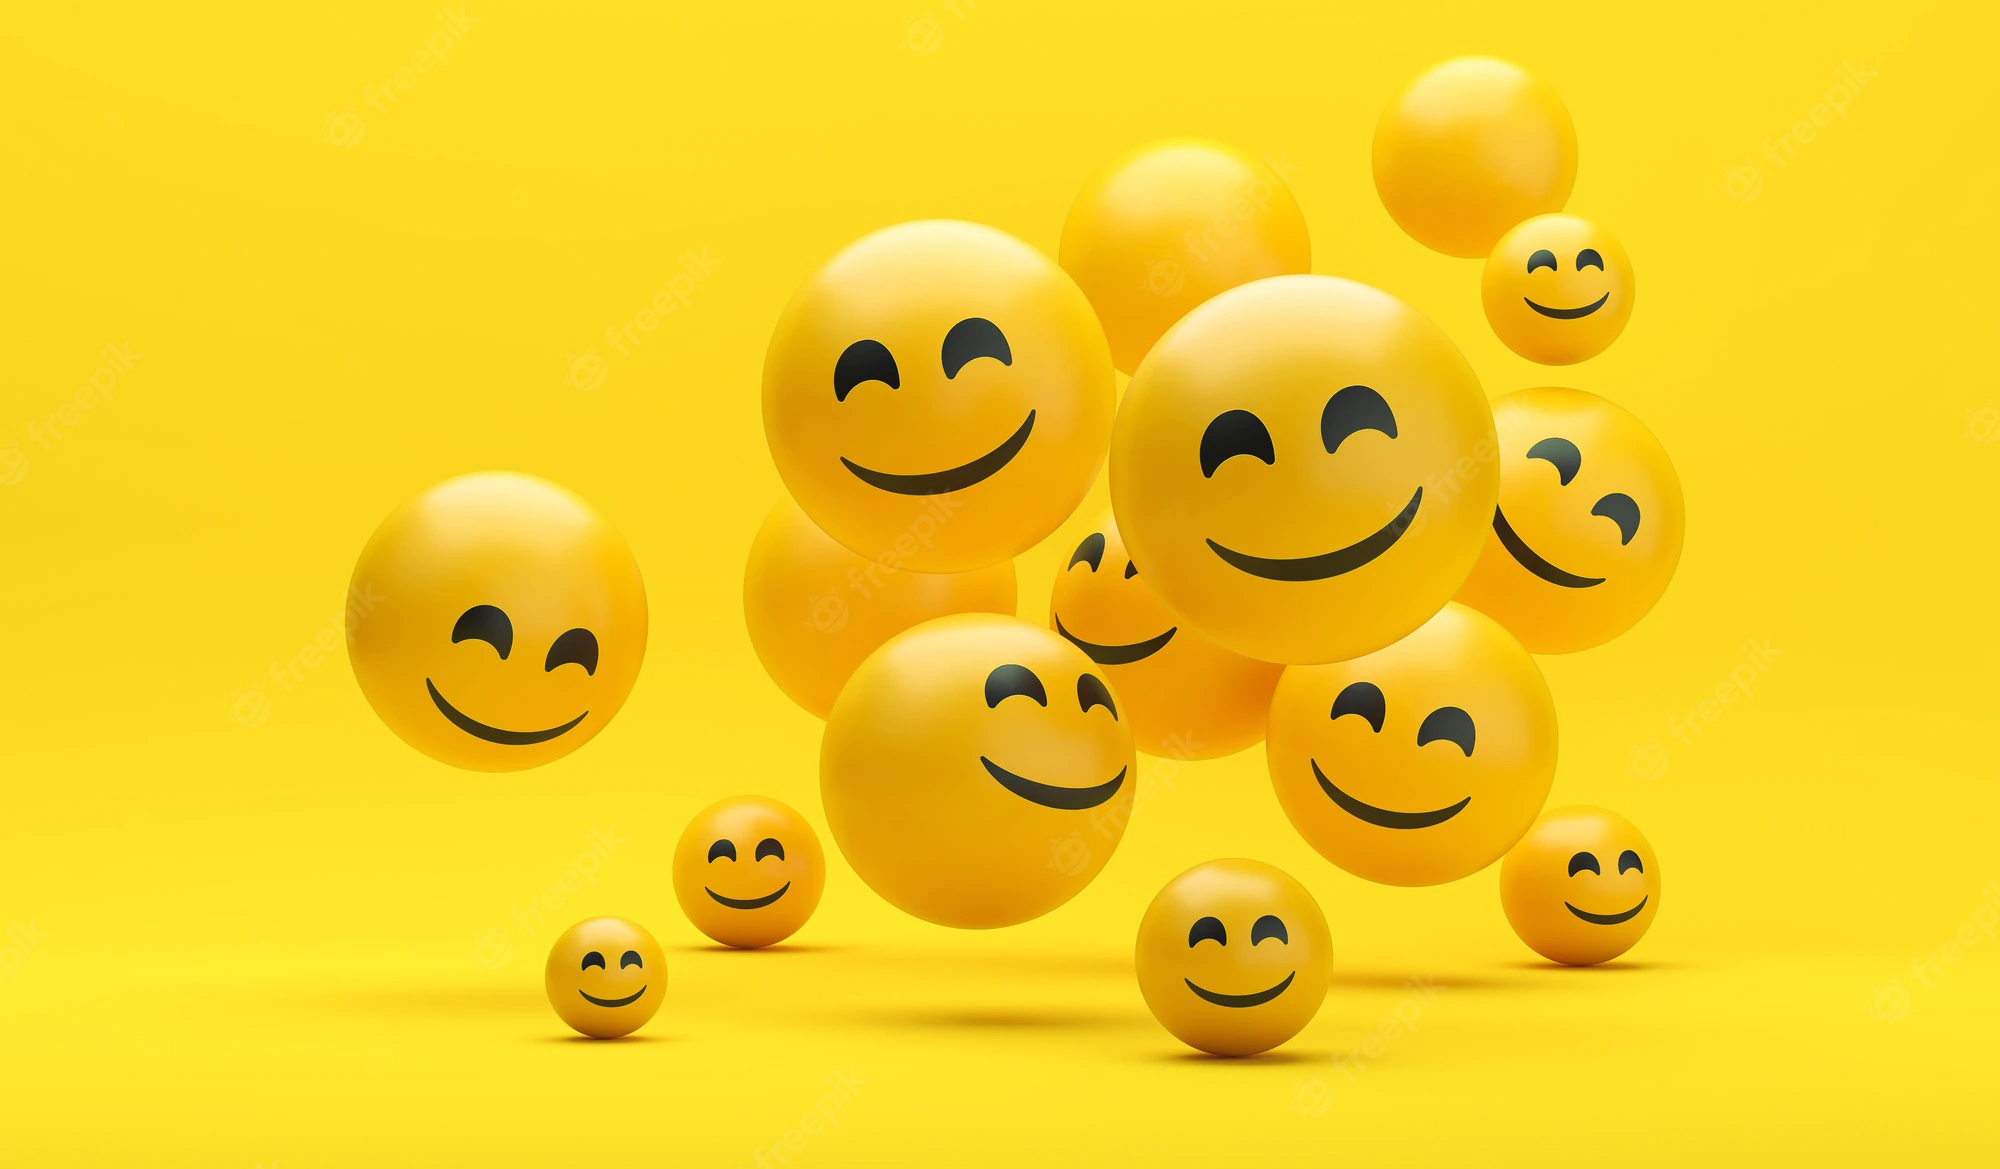 world-smile-day-emojis-composition_23-2149024497.webp